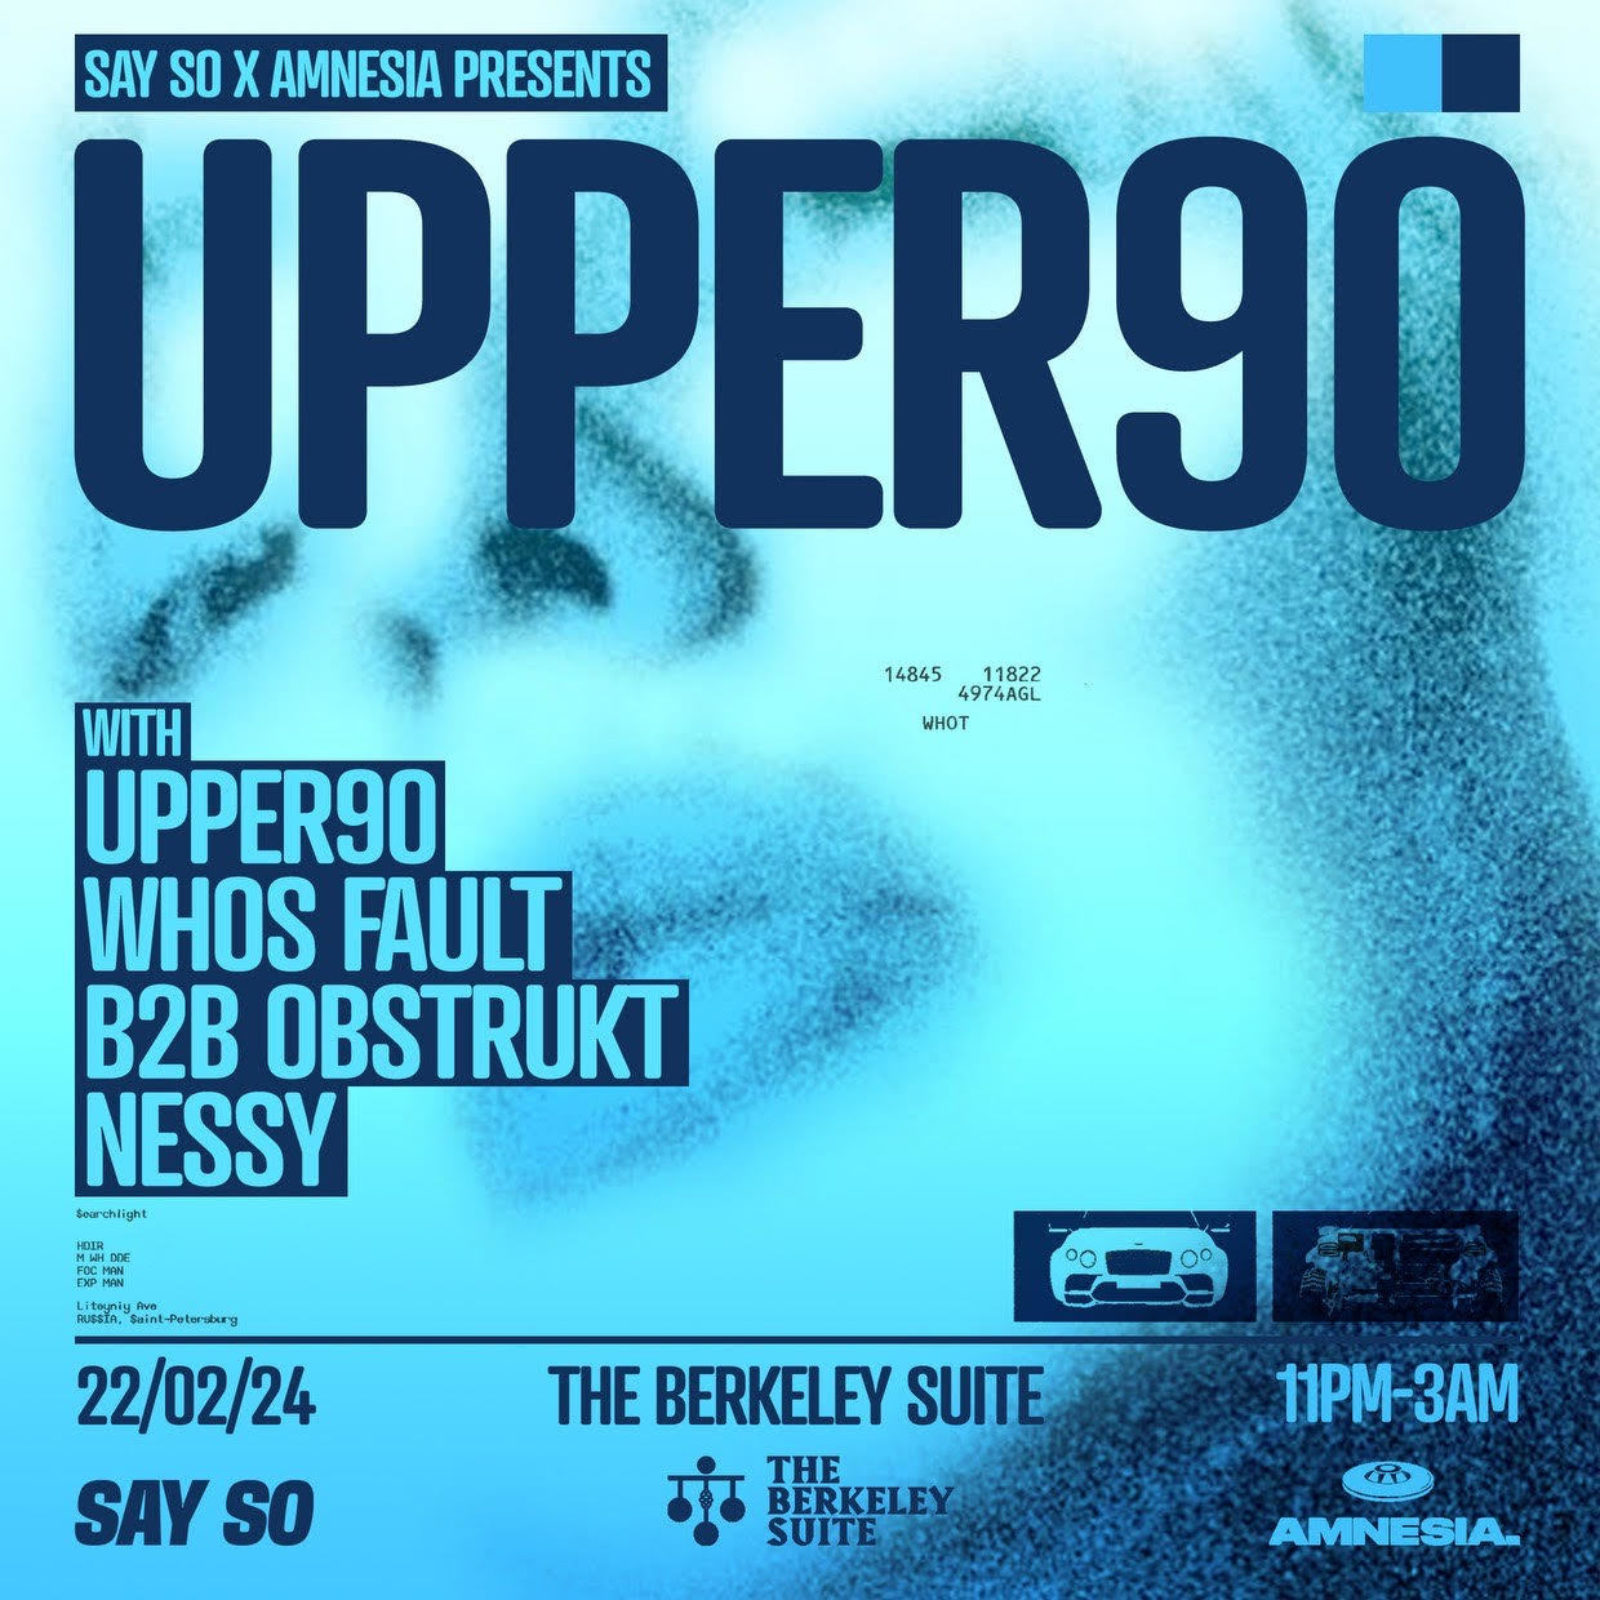 SAY SO X AMNESIA presents UPPER90